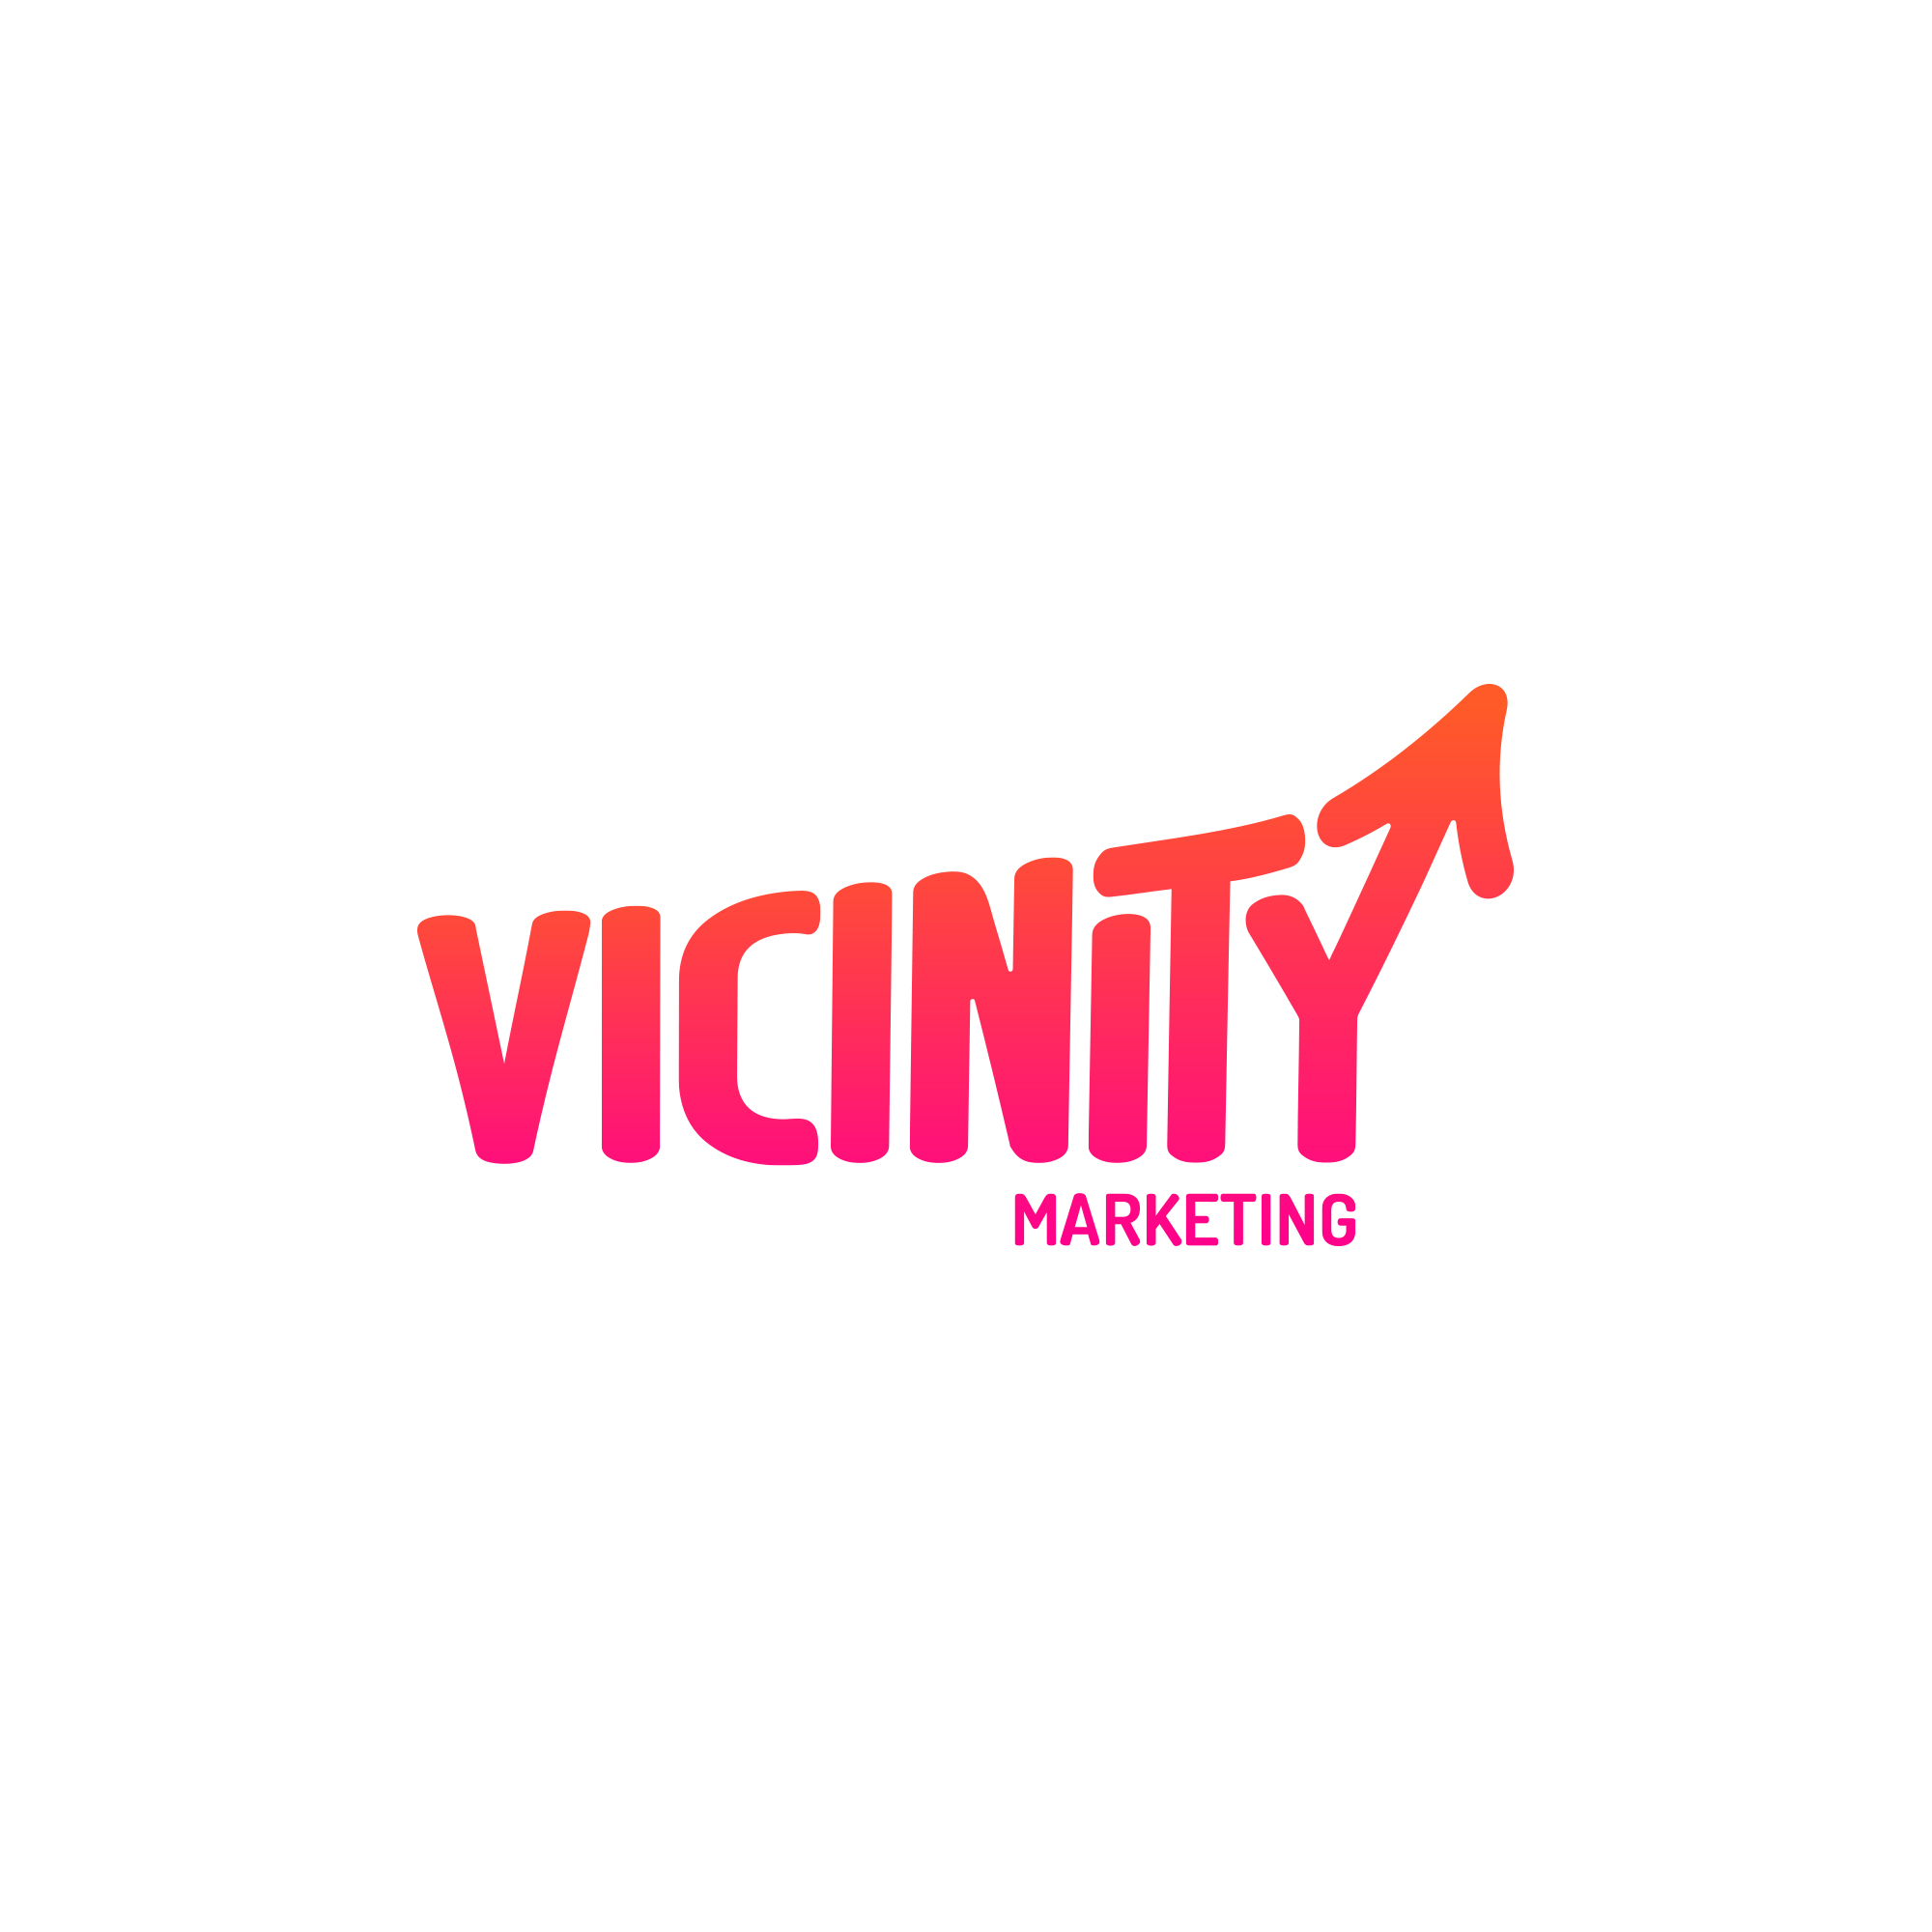 Vicinity Marketing on White